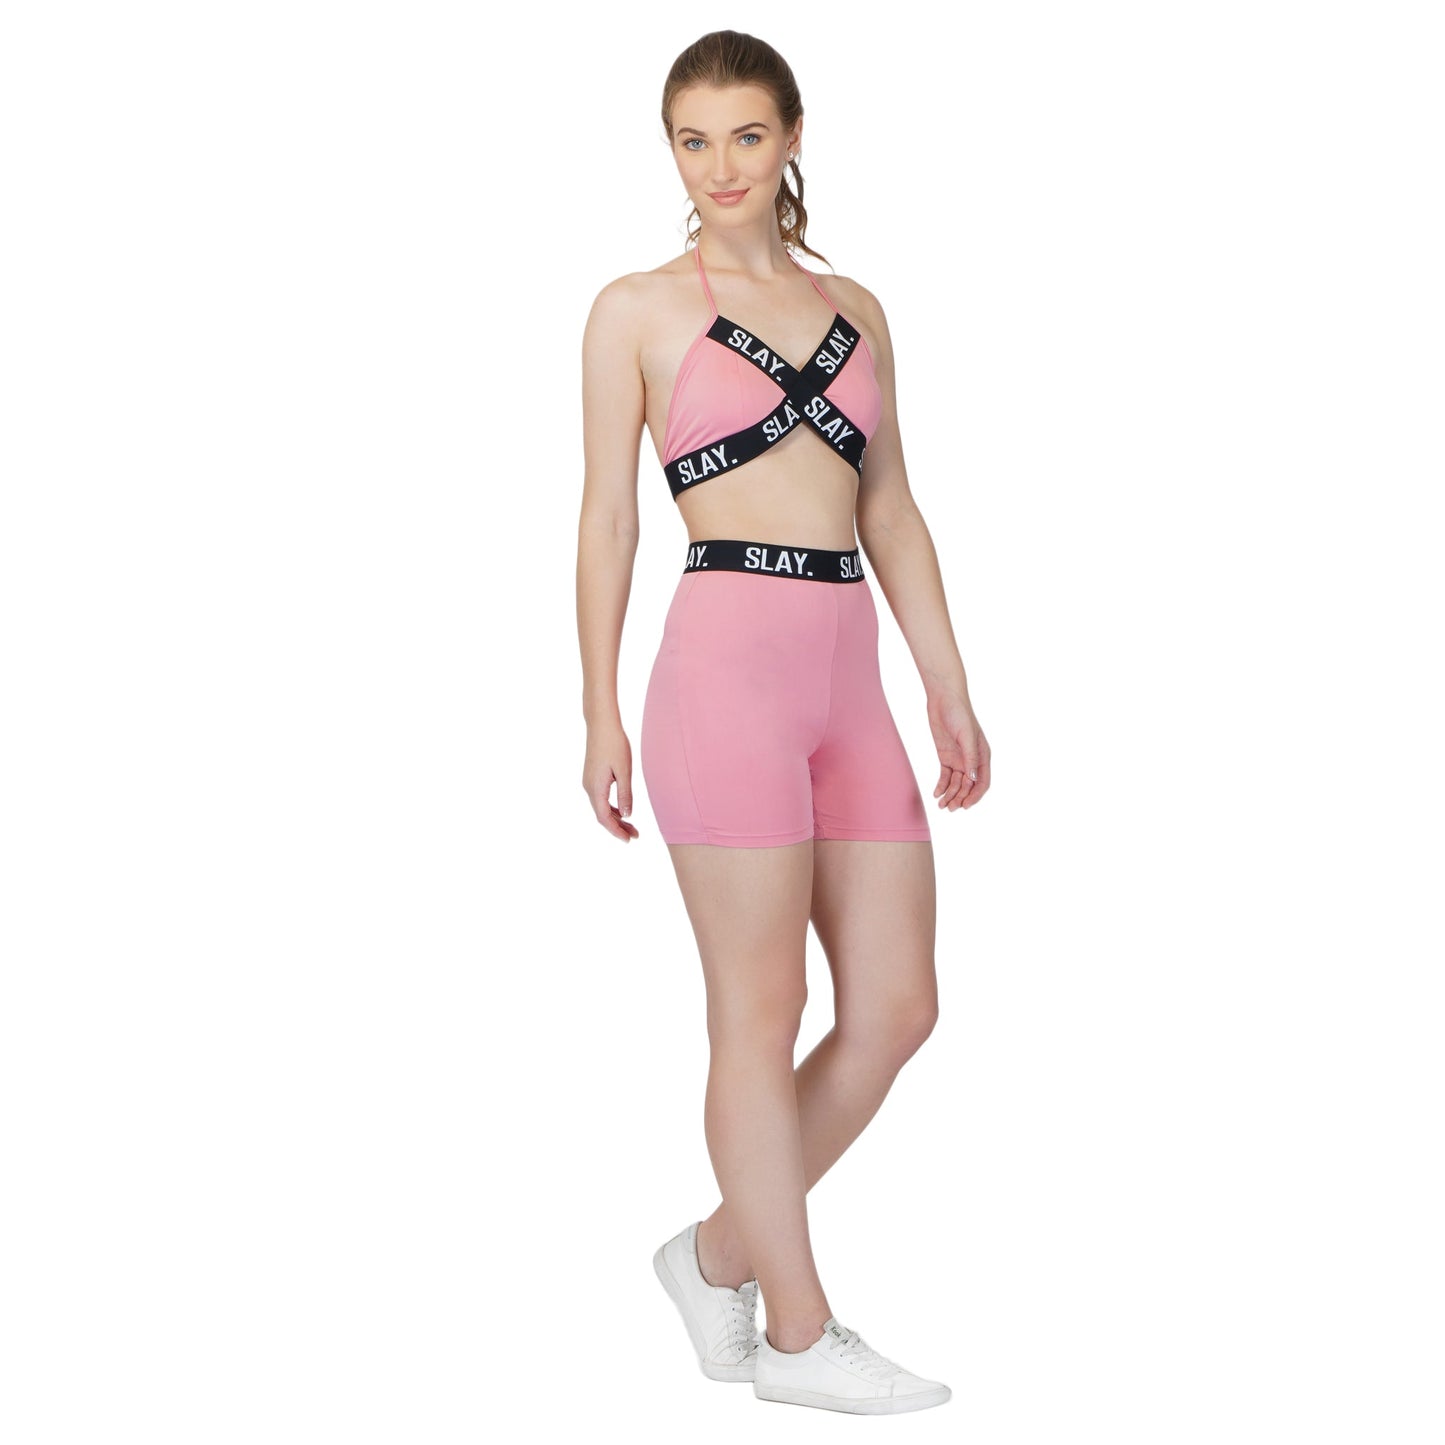 SLAY. Women's Pink Activewear Backless Sports Bra